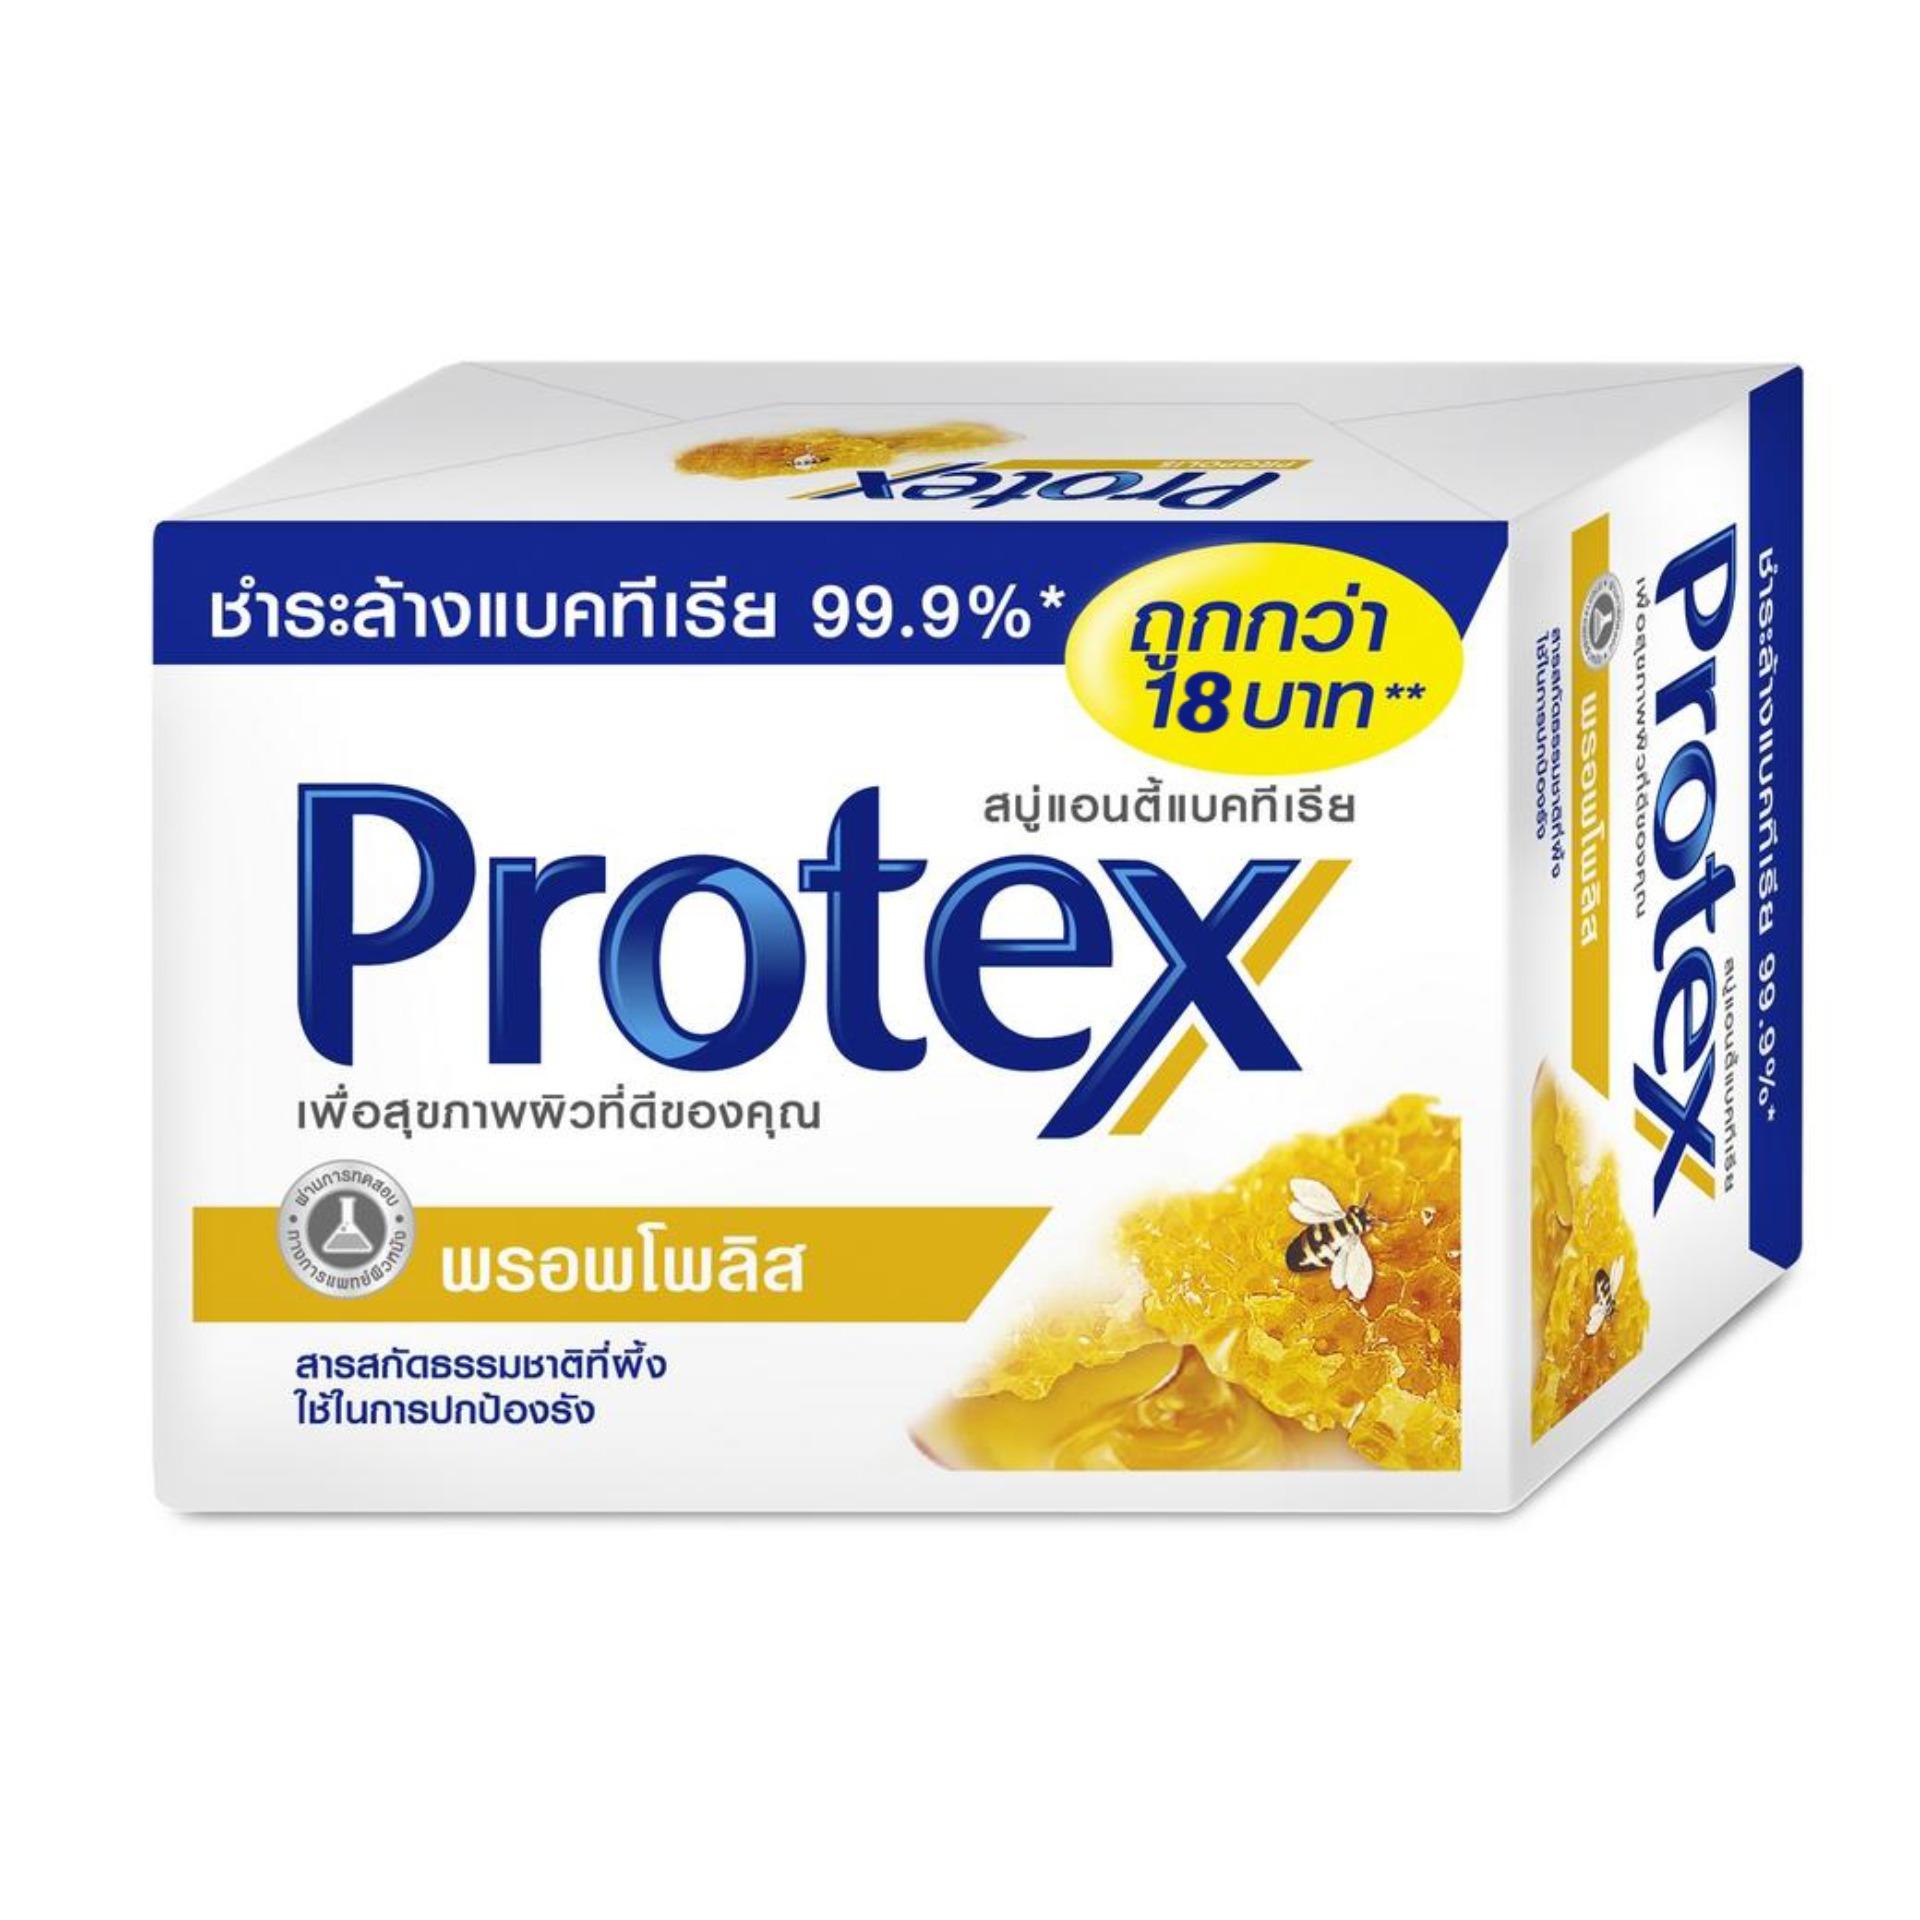 Protex สบู่ก้อนโพรเทคส์ พรอพโพลิส 100 กรัม แพ็ค 4Protex Propolis Soap 100g pack 4 (Soap, Body Wash, Body Soap, สบู่,สบู่อาบน้ำ) ของแท้